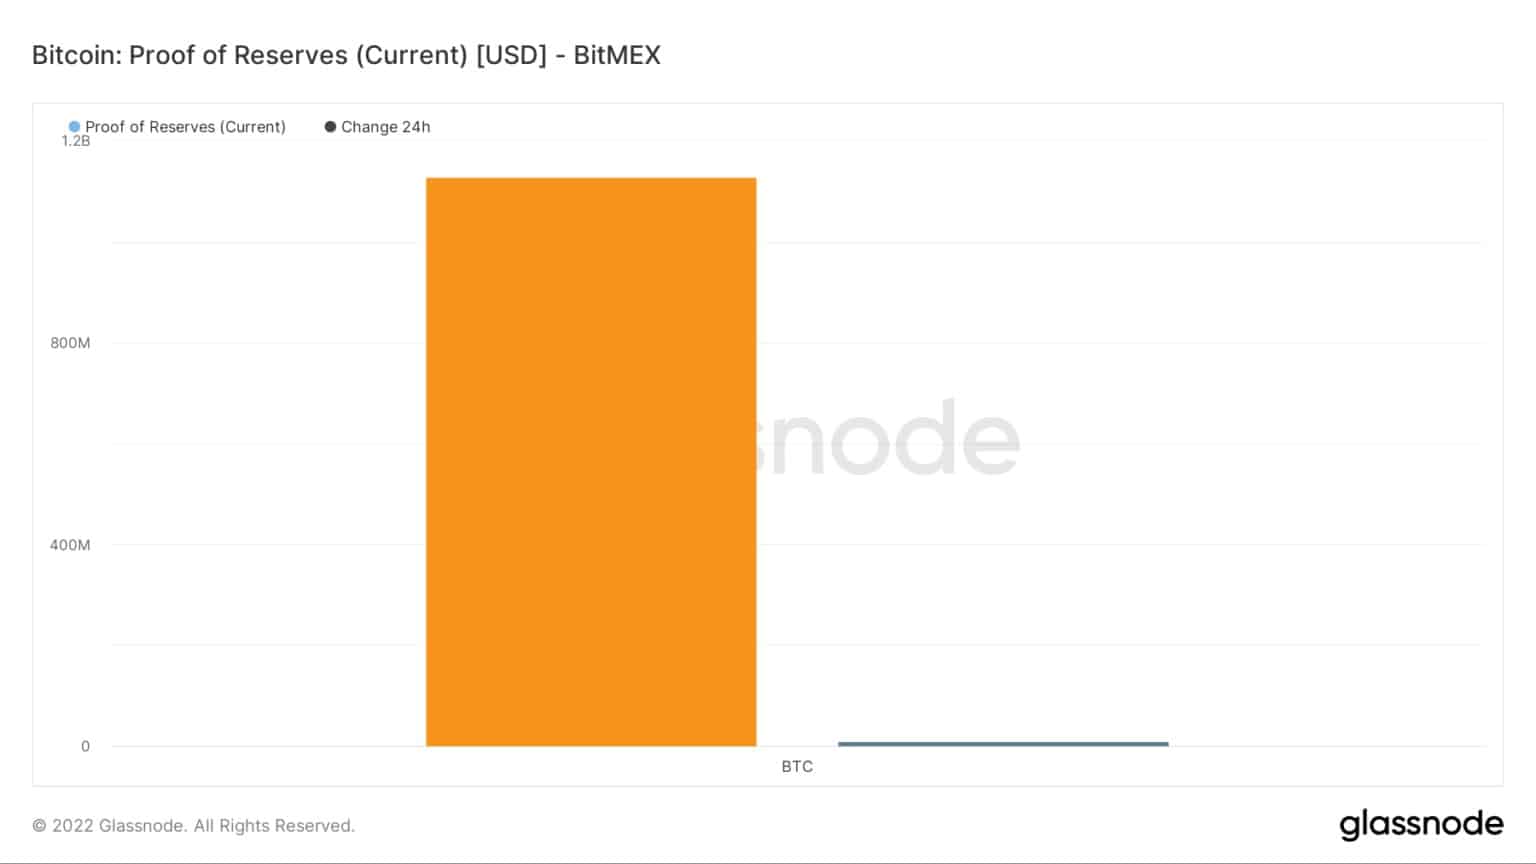 Proof of reserves - BitMEX / Source: Glassnode